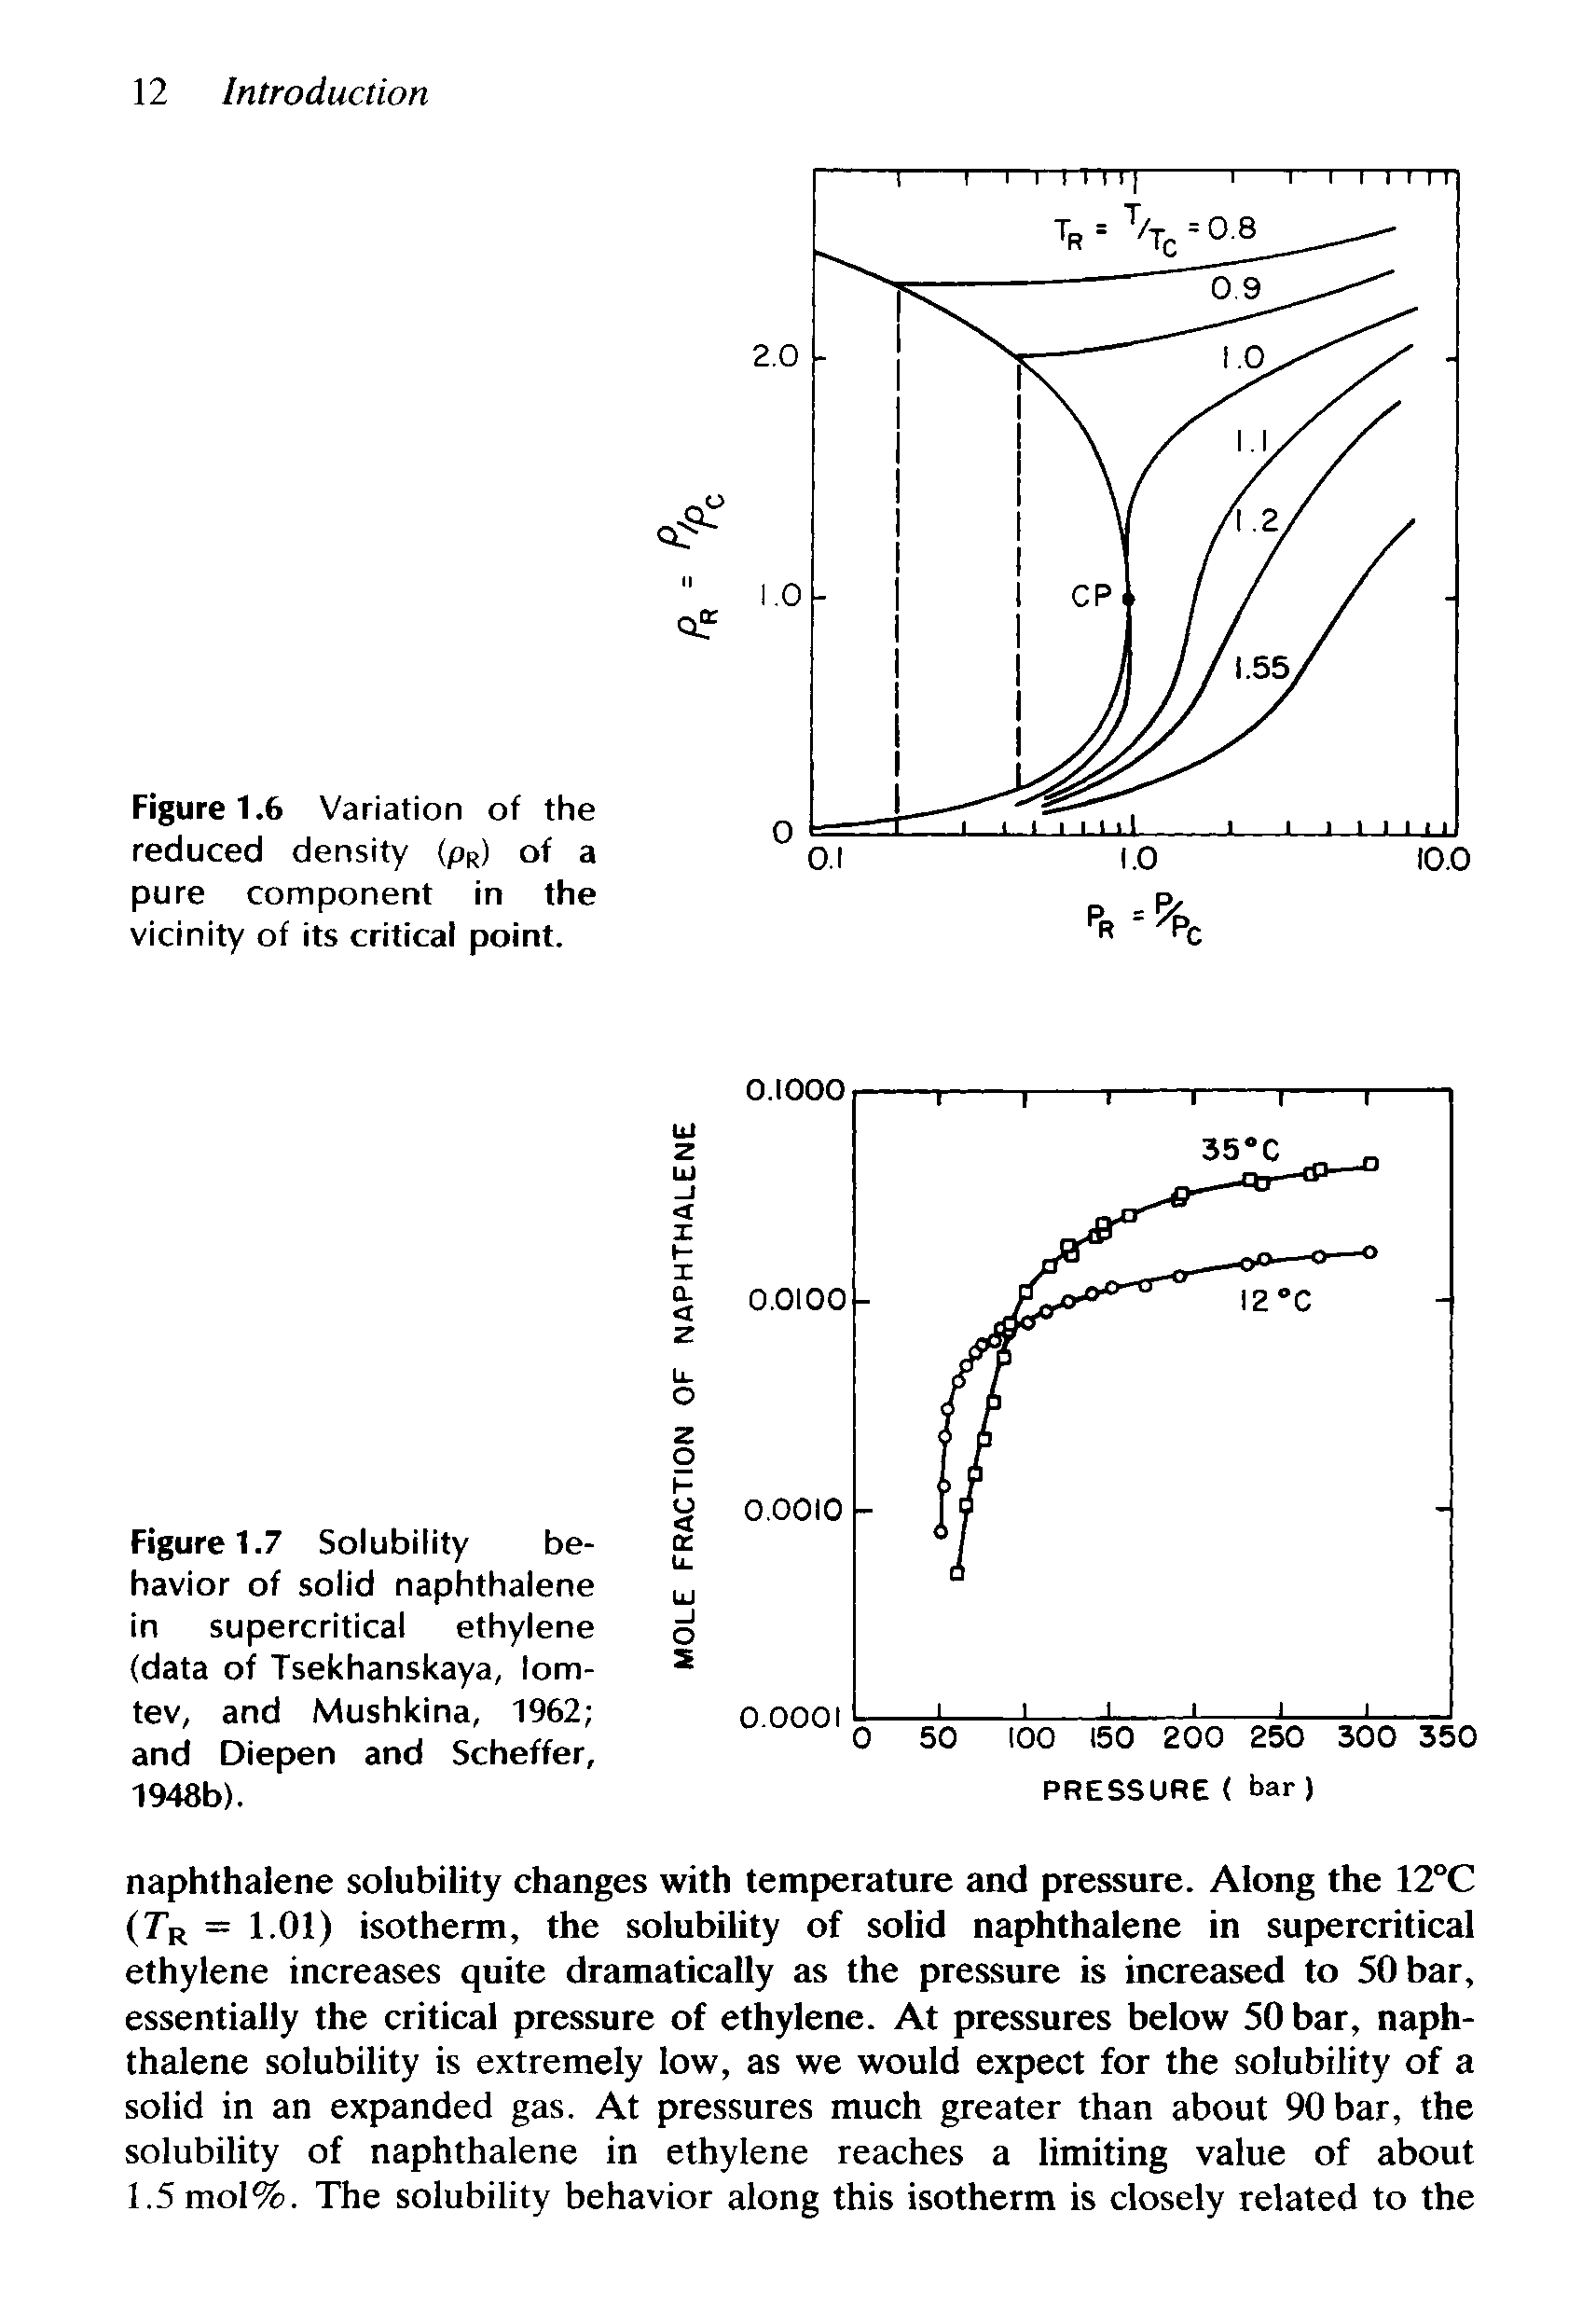 Figure 1.7 Solubility behavior of solid naphthalene in supercritical ethylene (data of Tsekhanskaya, lom-tev, and Mushkina, 1962 and Diepen and Scheffer, 1948b).